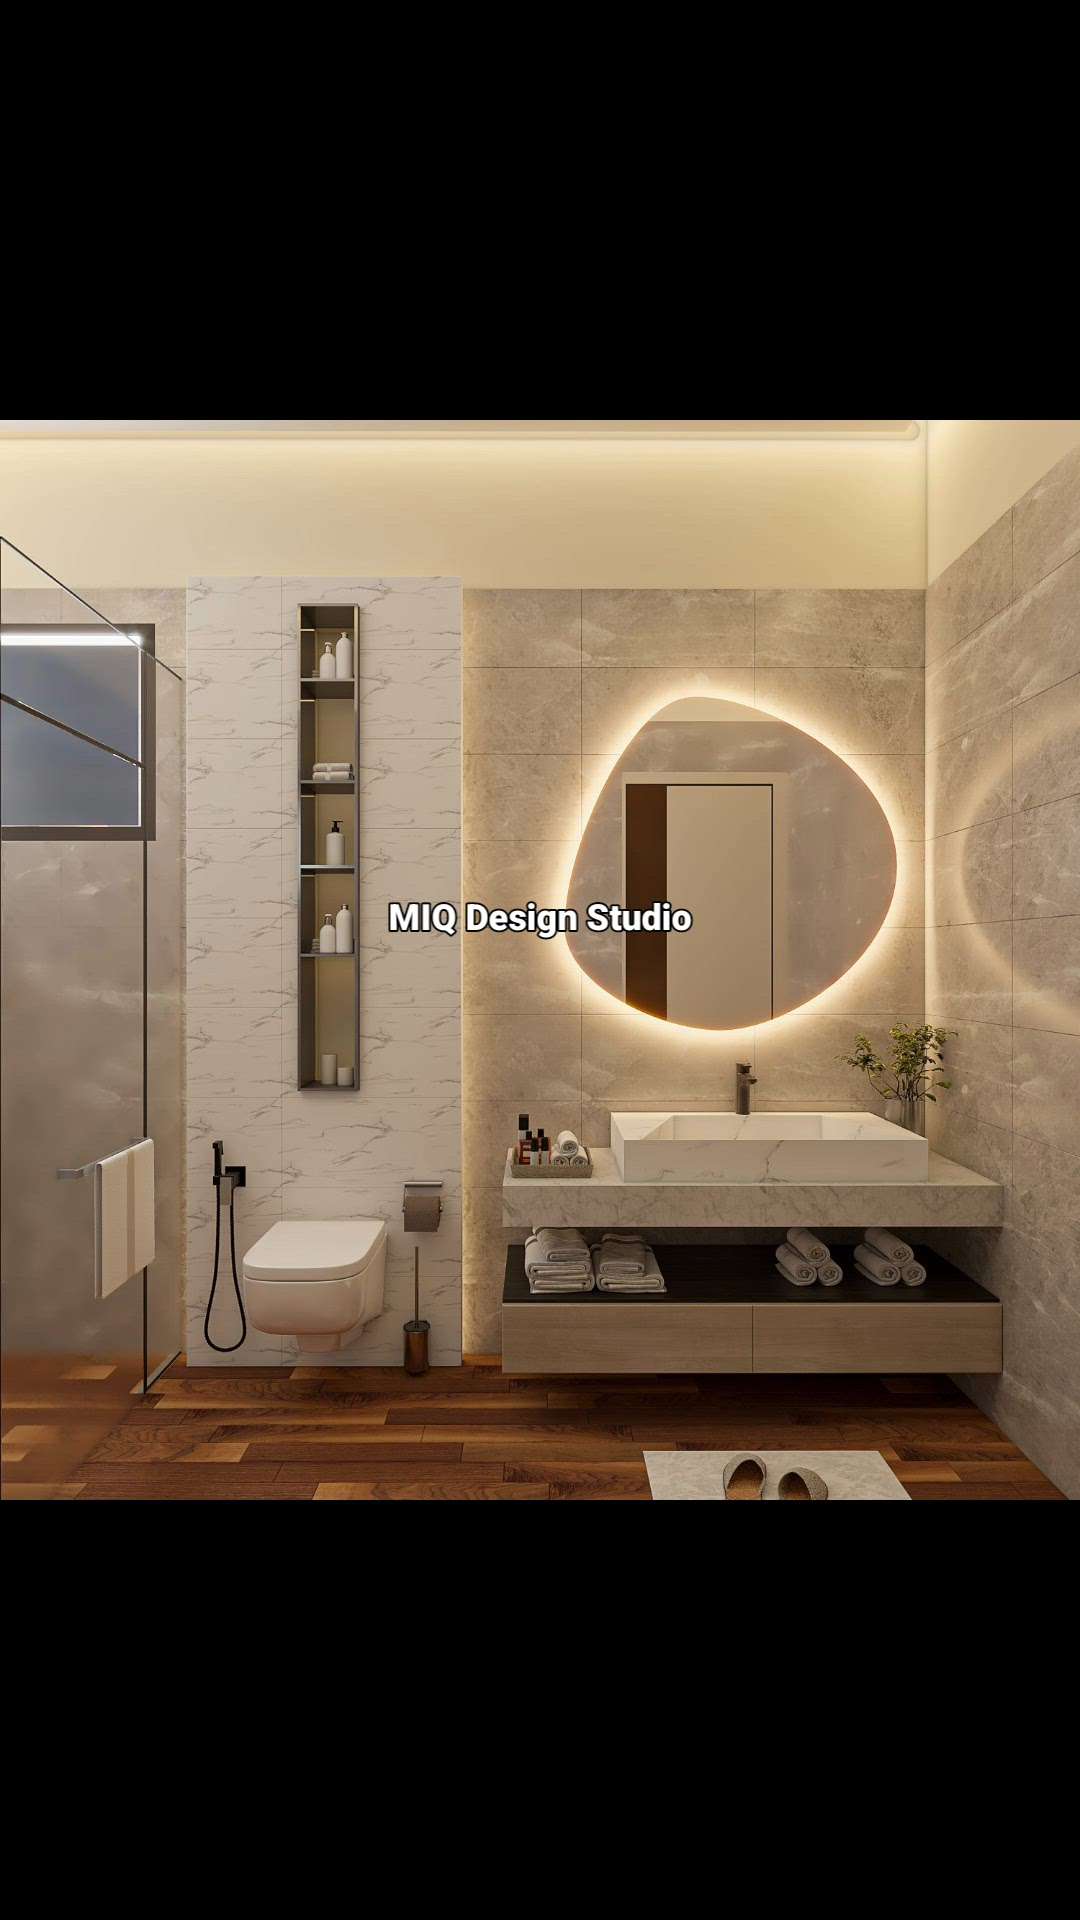 #Bathroom_Interio❣️
#MIQ_Design_Studio
#PLAN l #EXTERIOR l #INTERIOR
#Fast_Service l #Best_Quality l #High_Resolution 
#Online_Offline_Service
900-161-3330